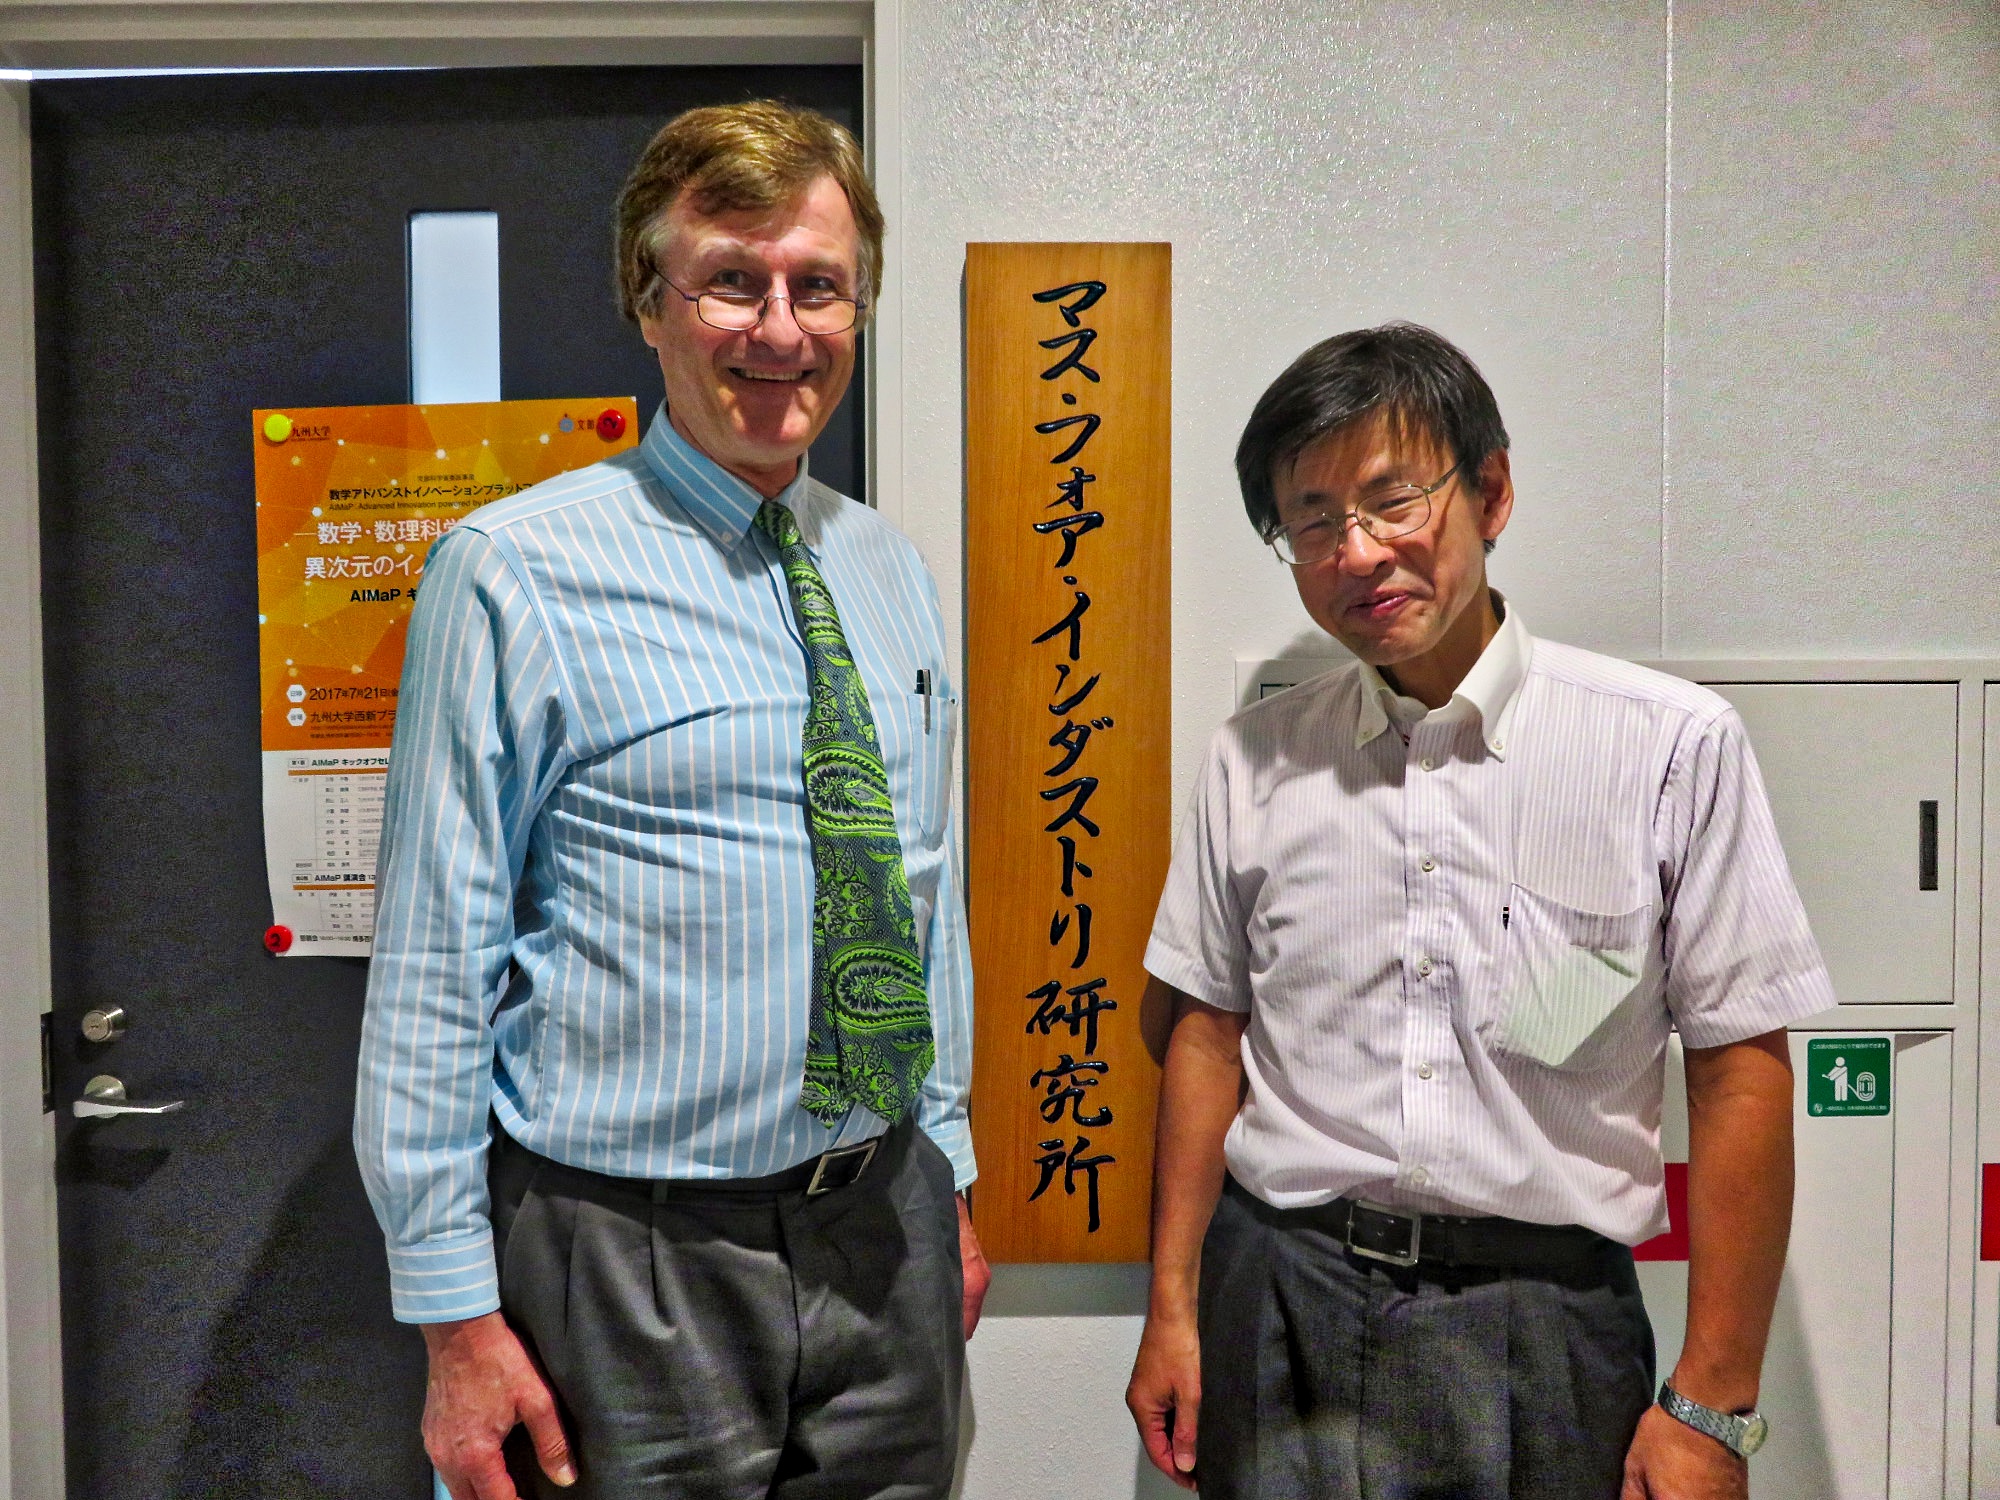 Mathematics for Industry Institute Director Yasuhide Fukumoto and Gerhard Fasol